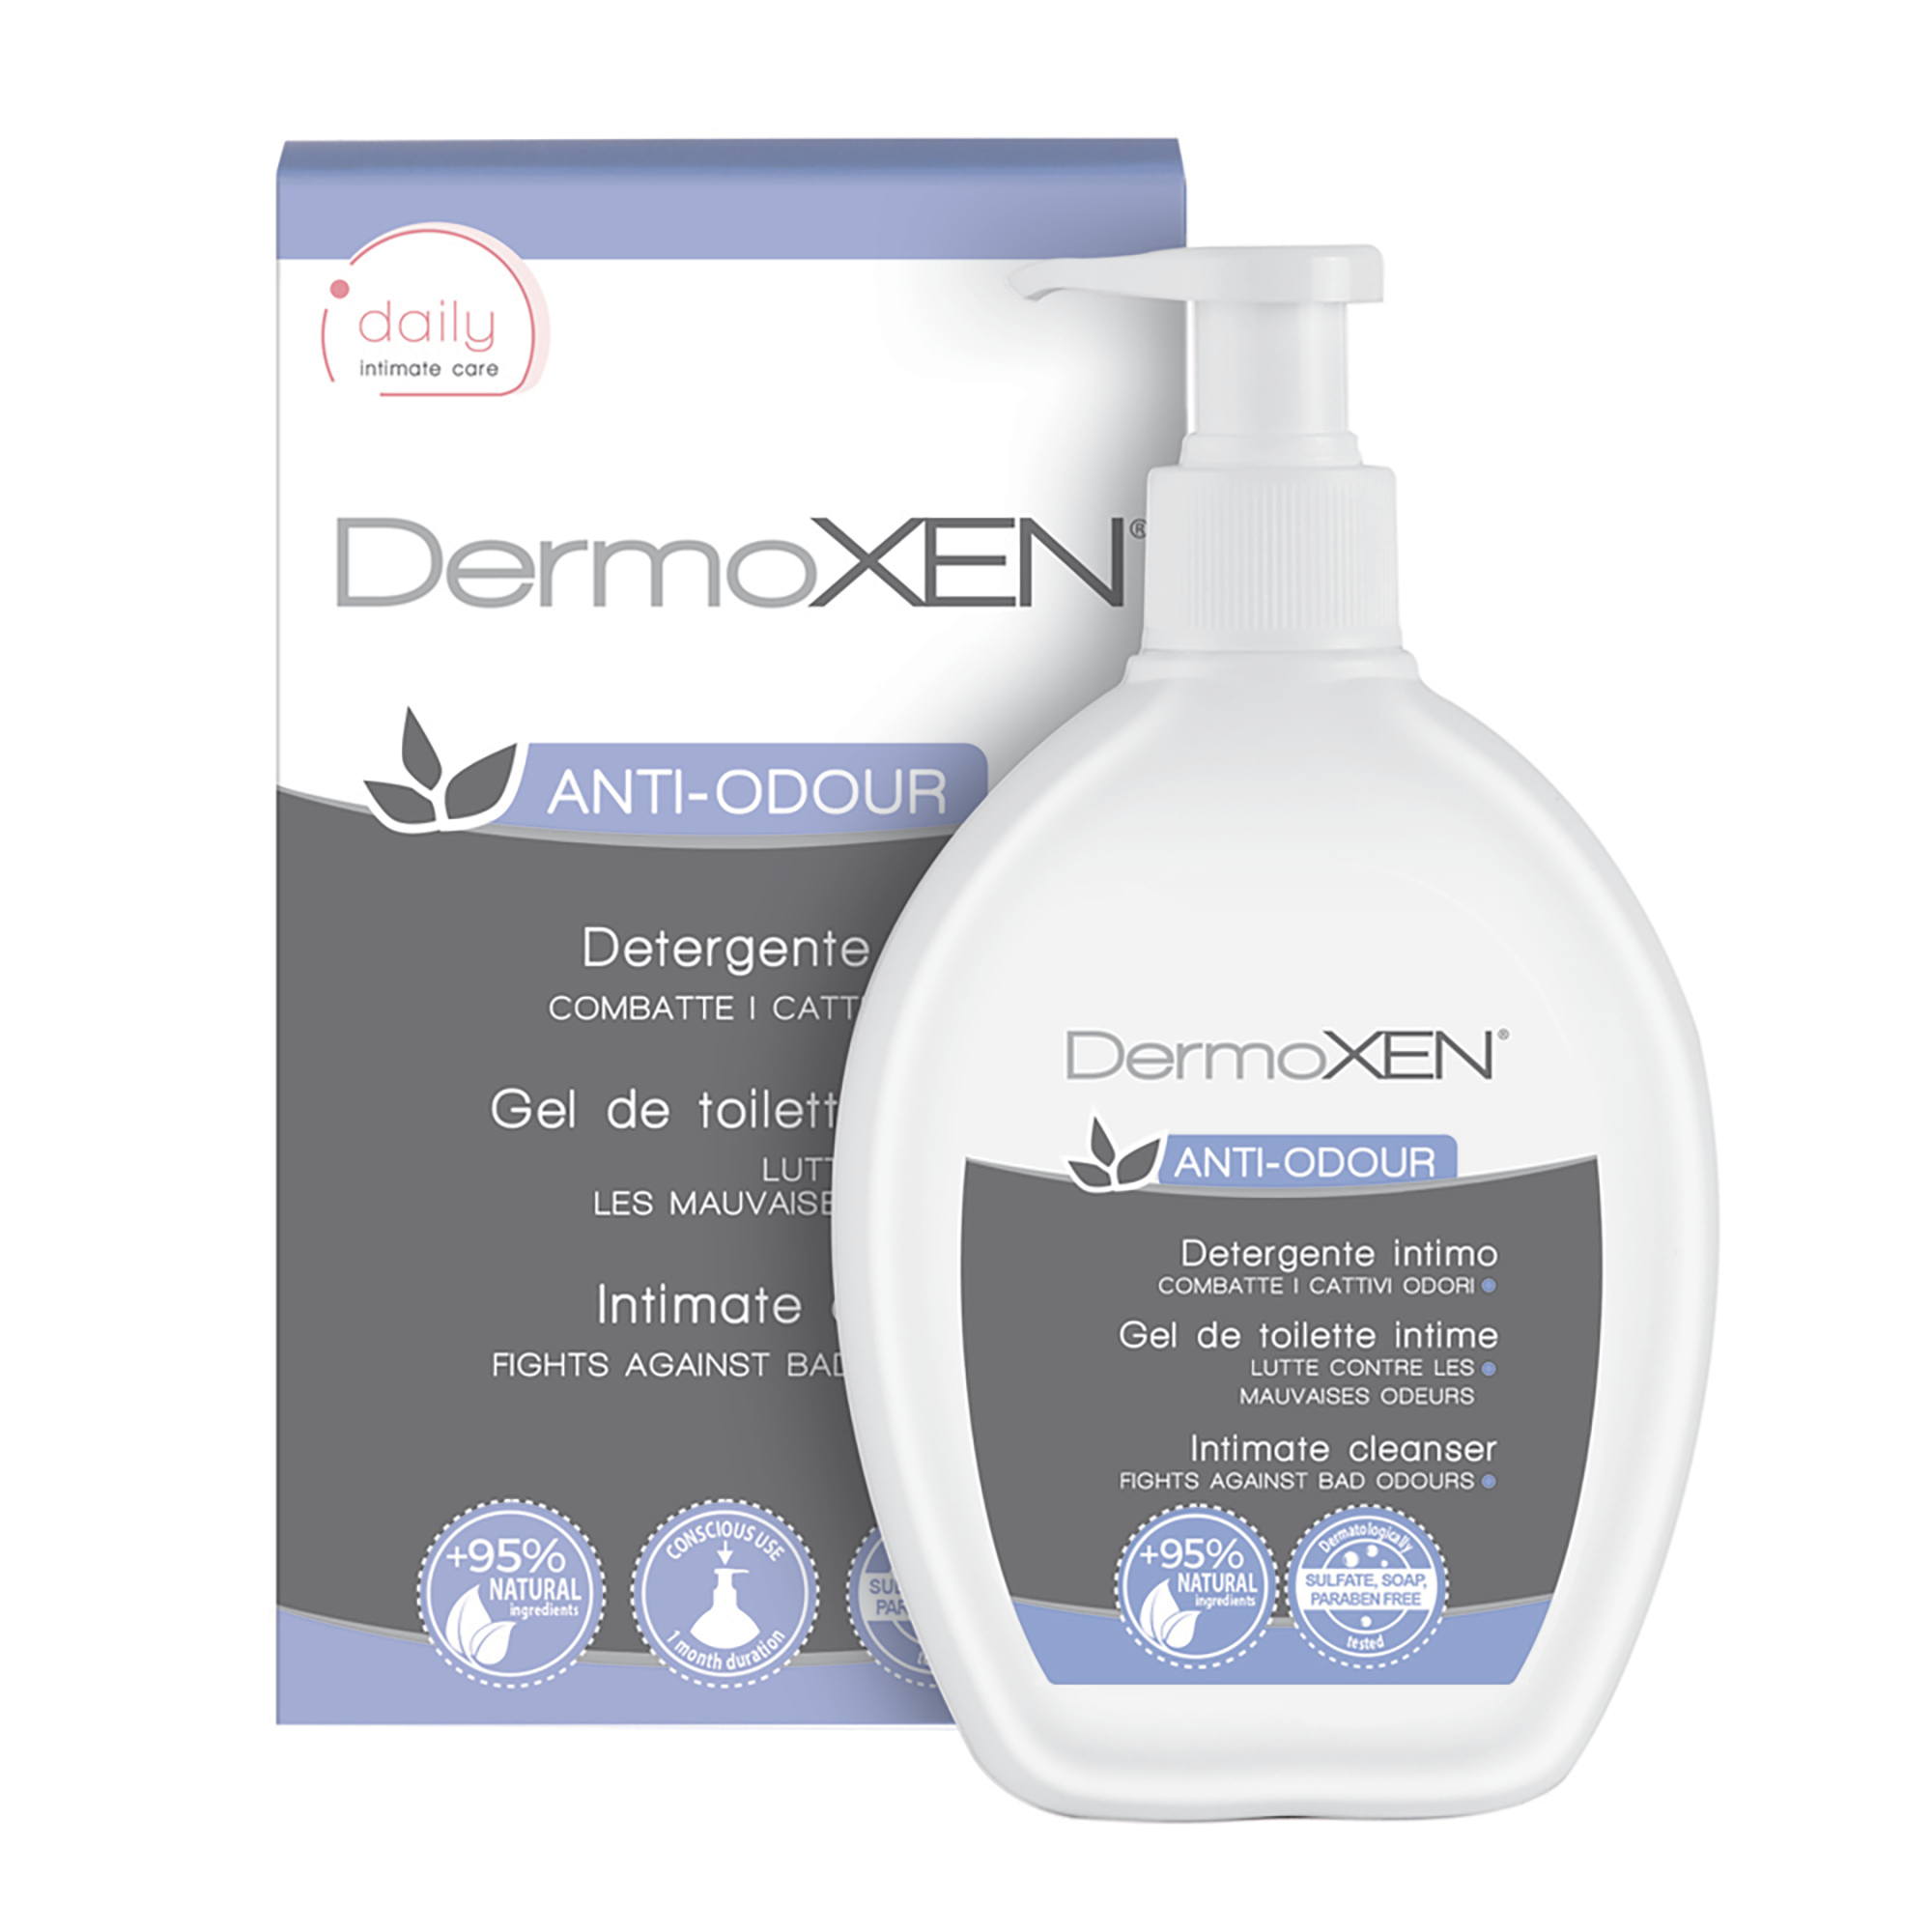 Dermoxen ANTI-ODOUR FRESHintimate cleanser